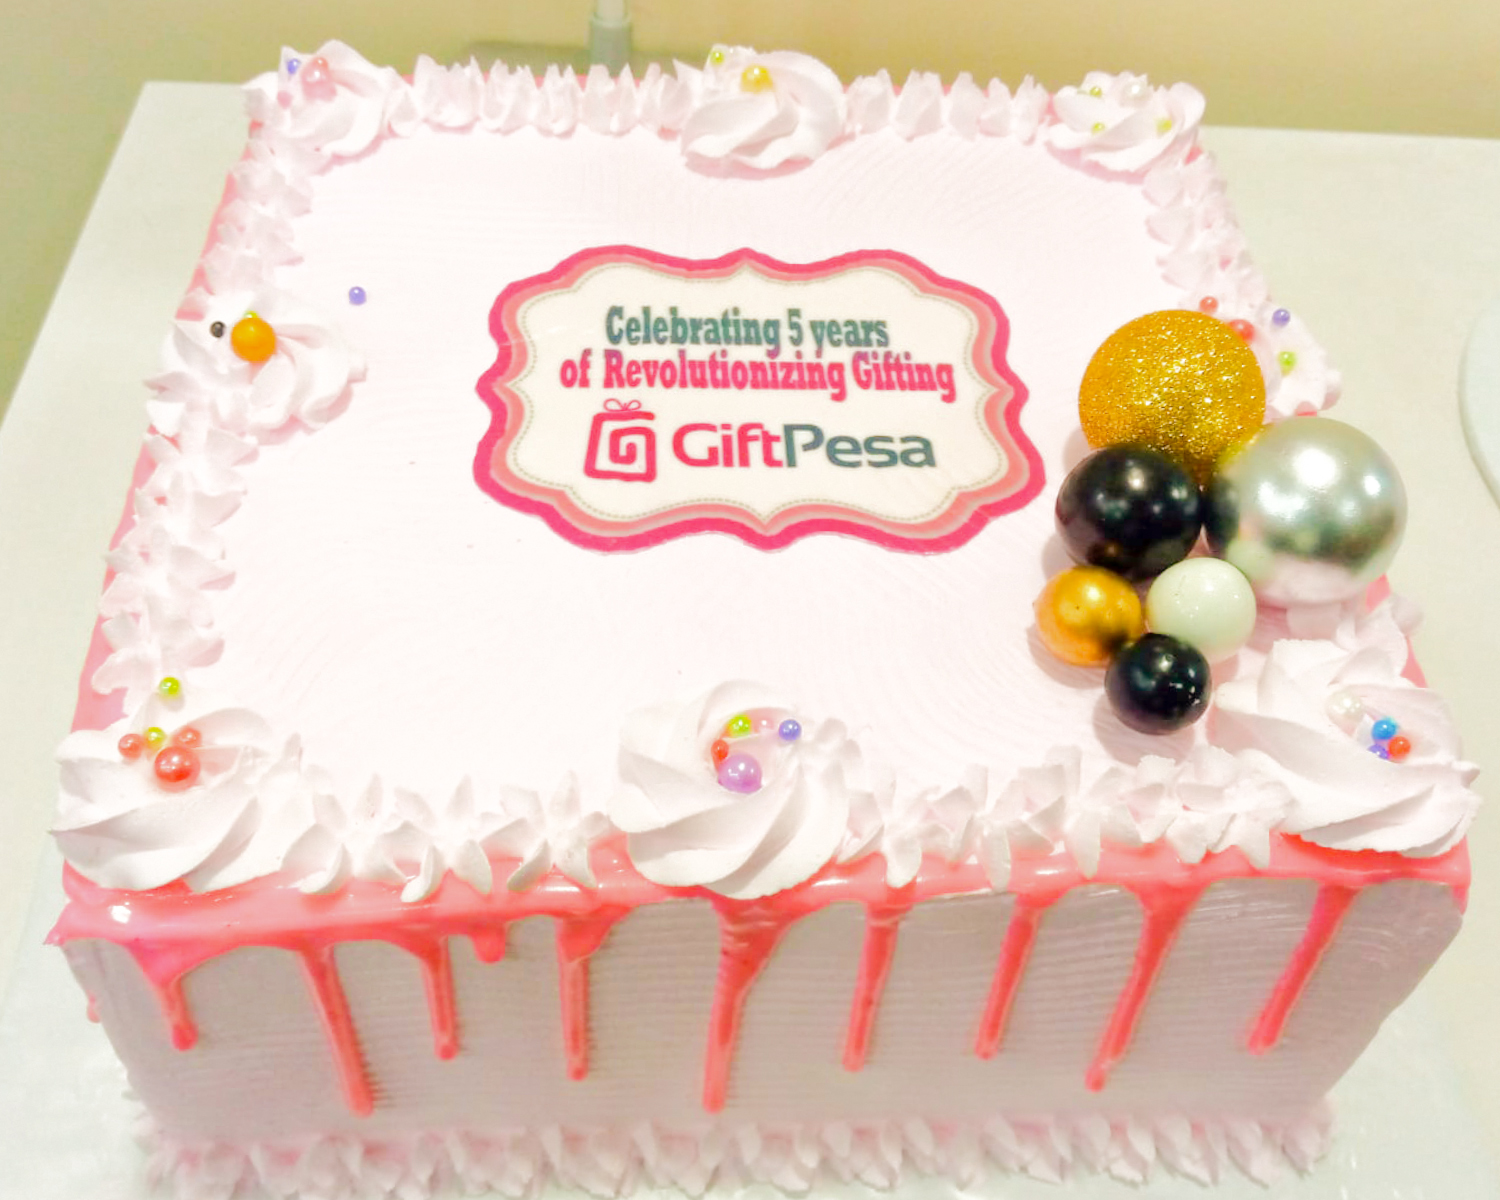 Cake to celebrate Giftpesa's 5th anniversary